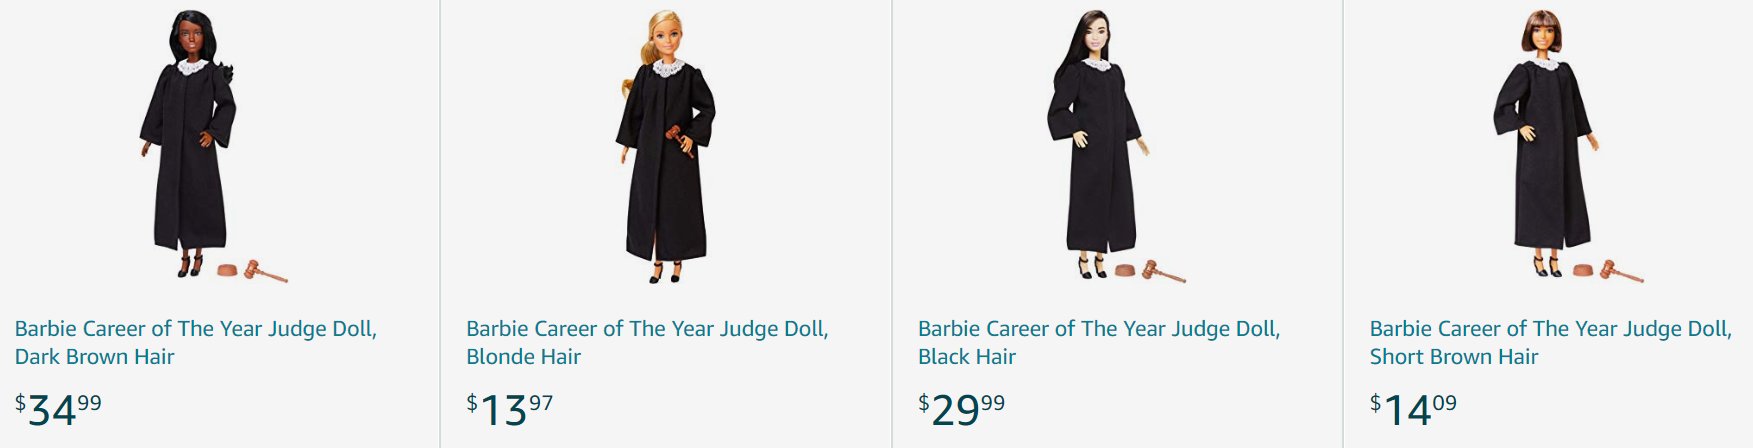 Barbie Takes On New Career As Judge  Essence